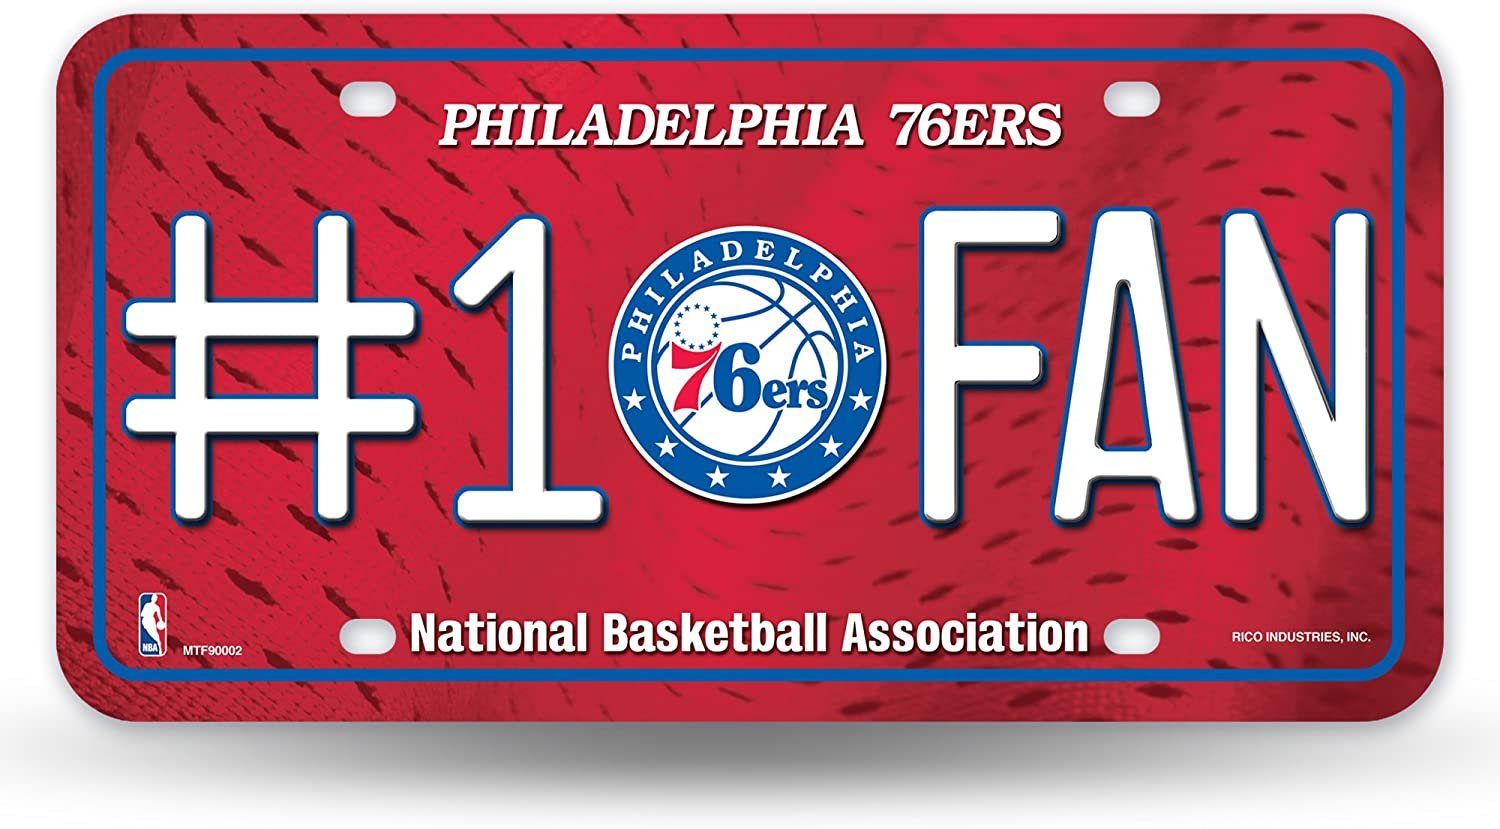 Philadelphia 76ers Metal Auto Tag License Plate, #1 Fan Design, 6x12 Inch